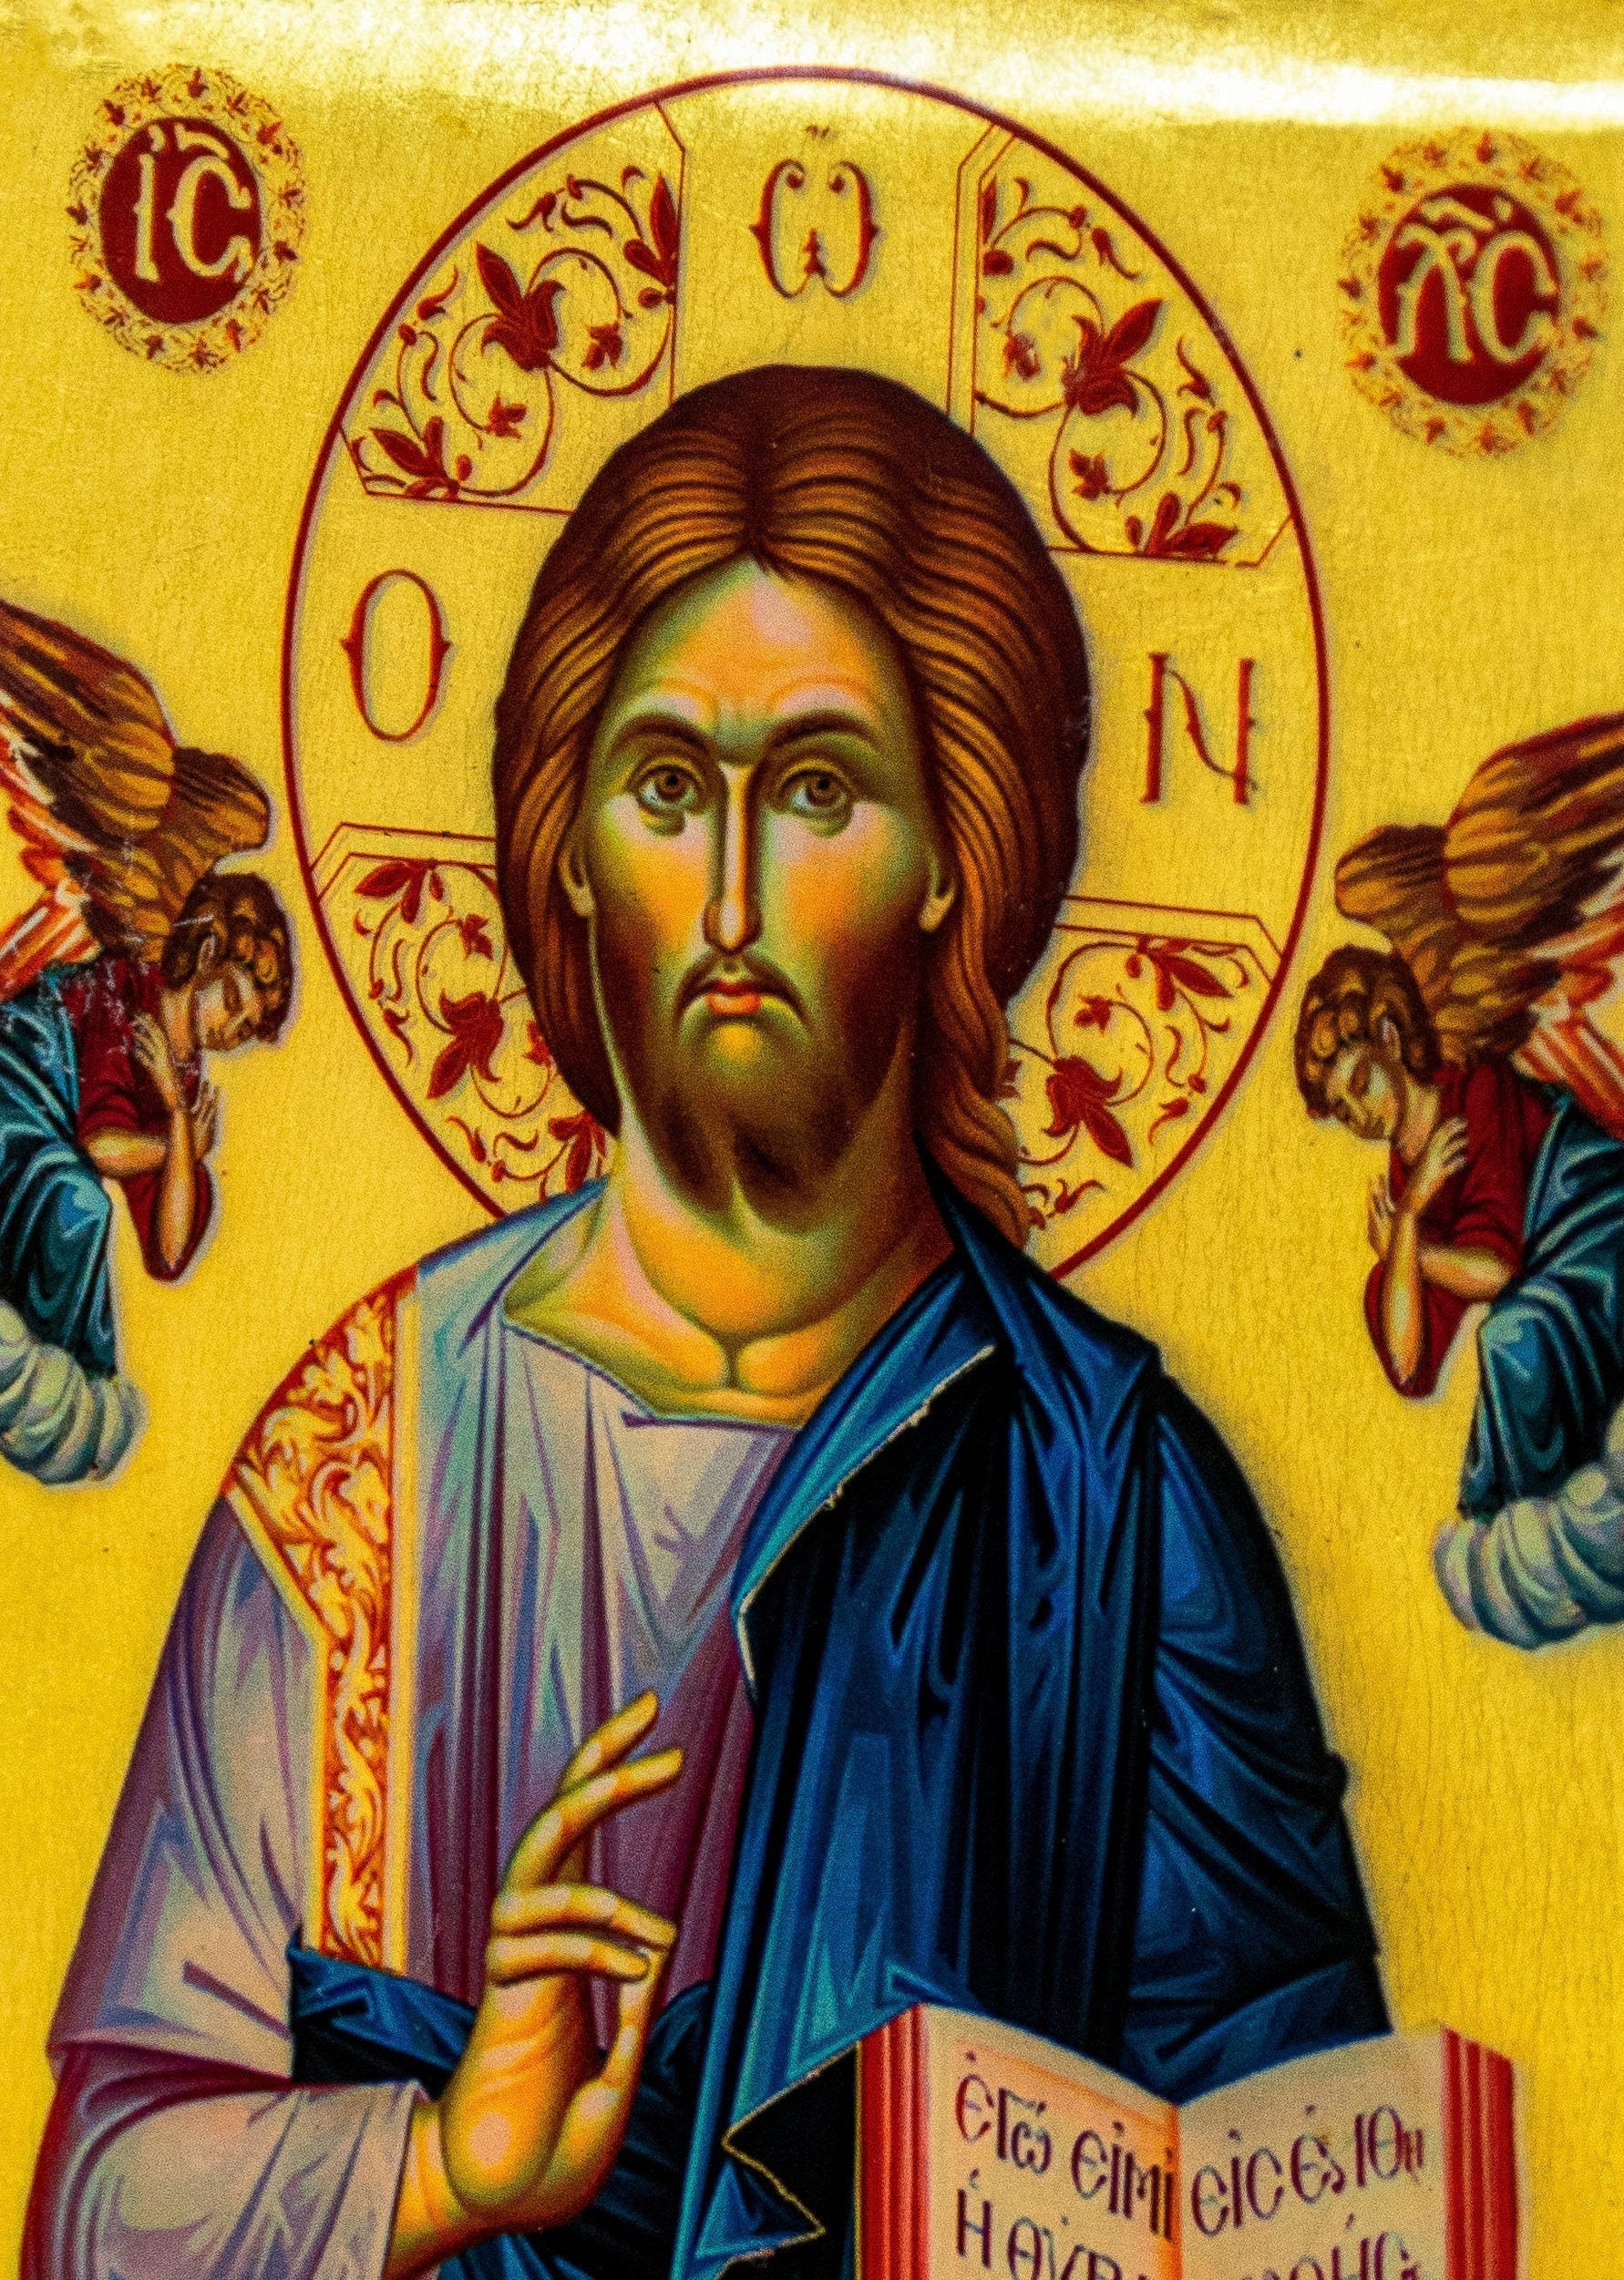 Jesus Christ icon, Handmade Greek Orthodox icon, Byzantine art wall hanging serigraphy icon w/ gold leaf wood plaque, religious gift TheHolyArt